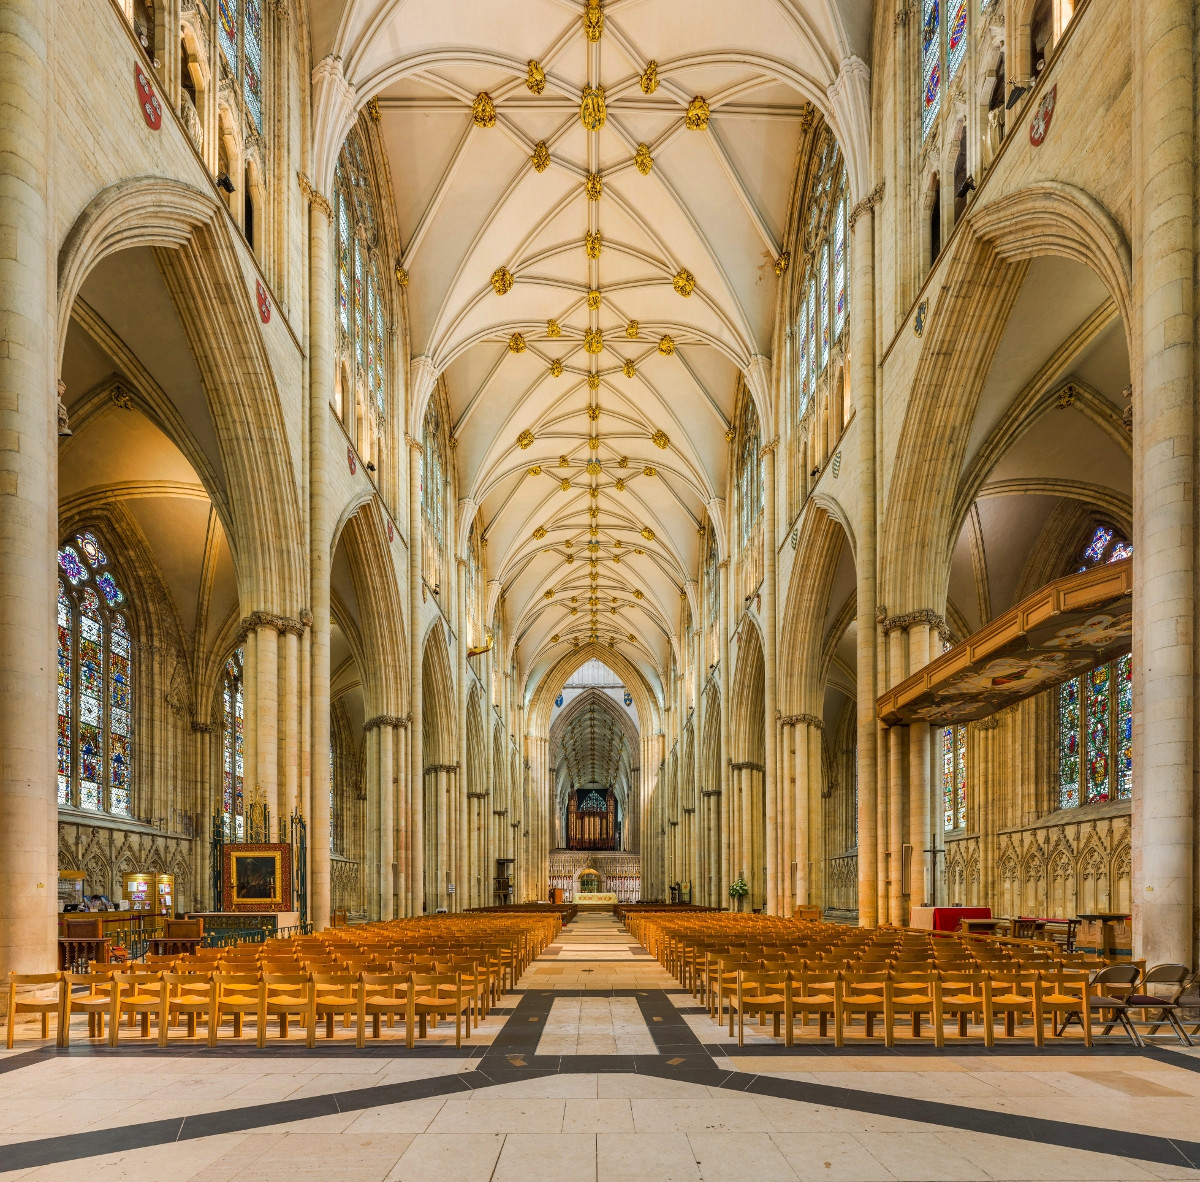 The nave of York Minster, David Iliff